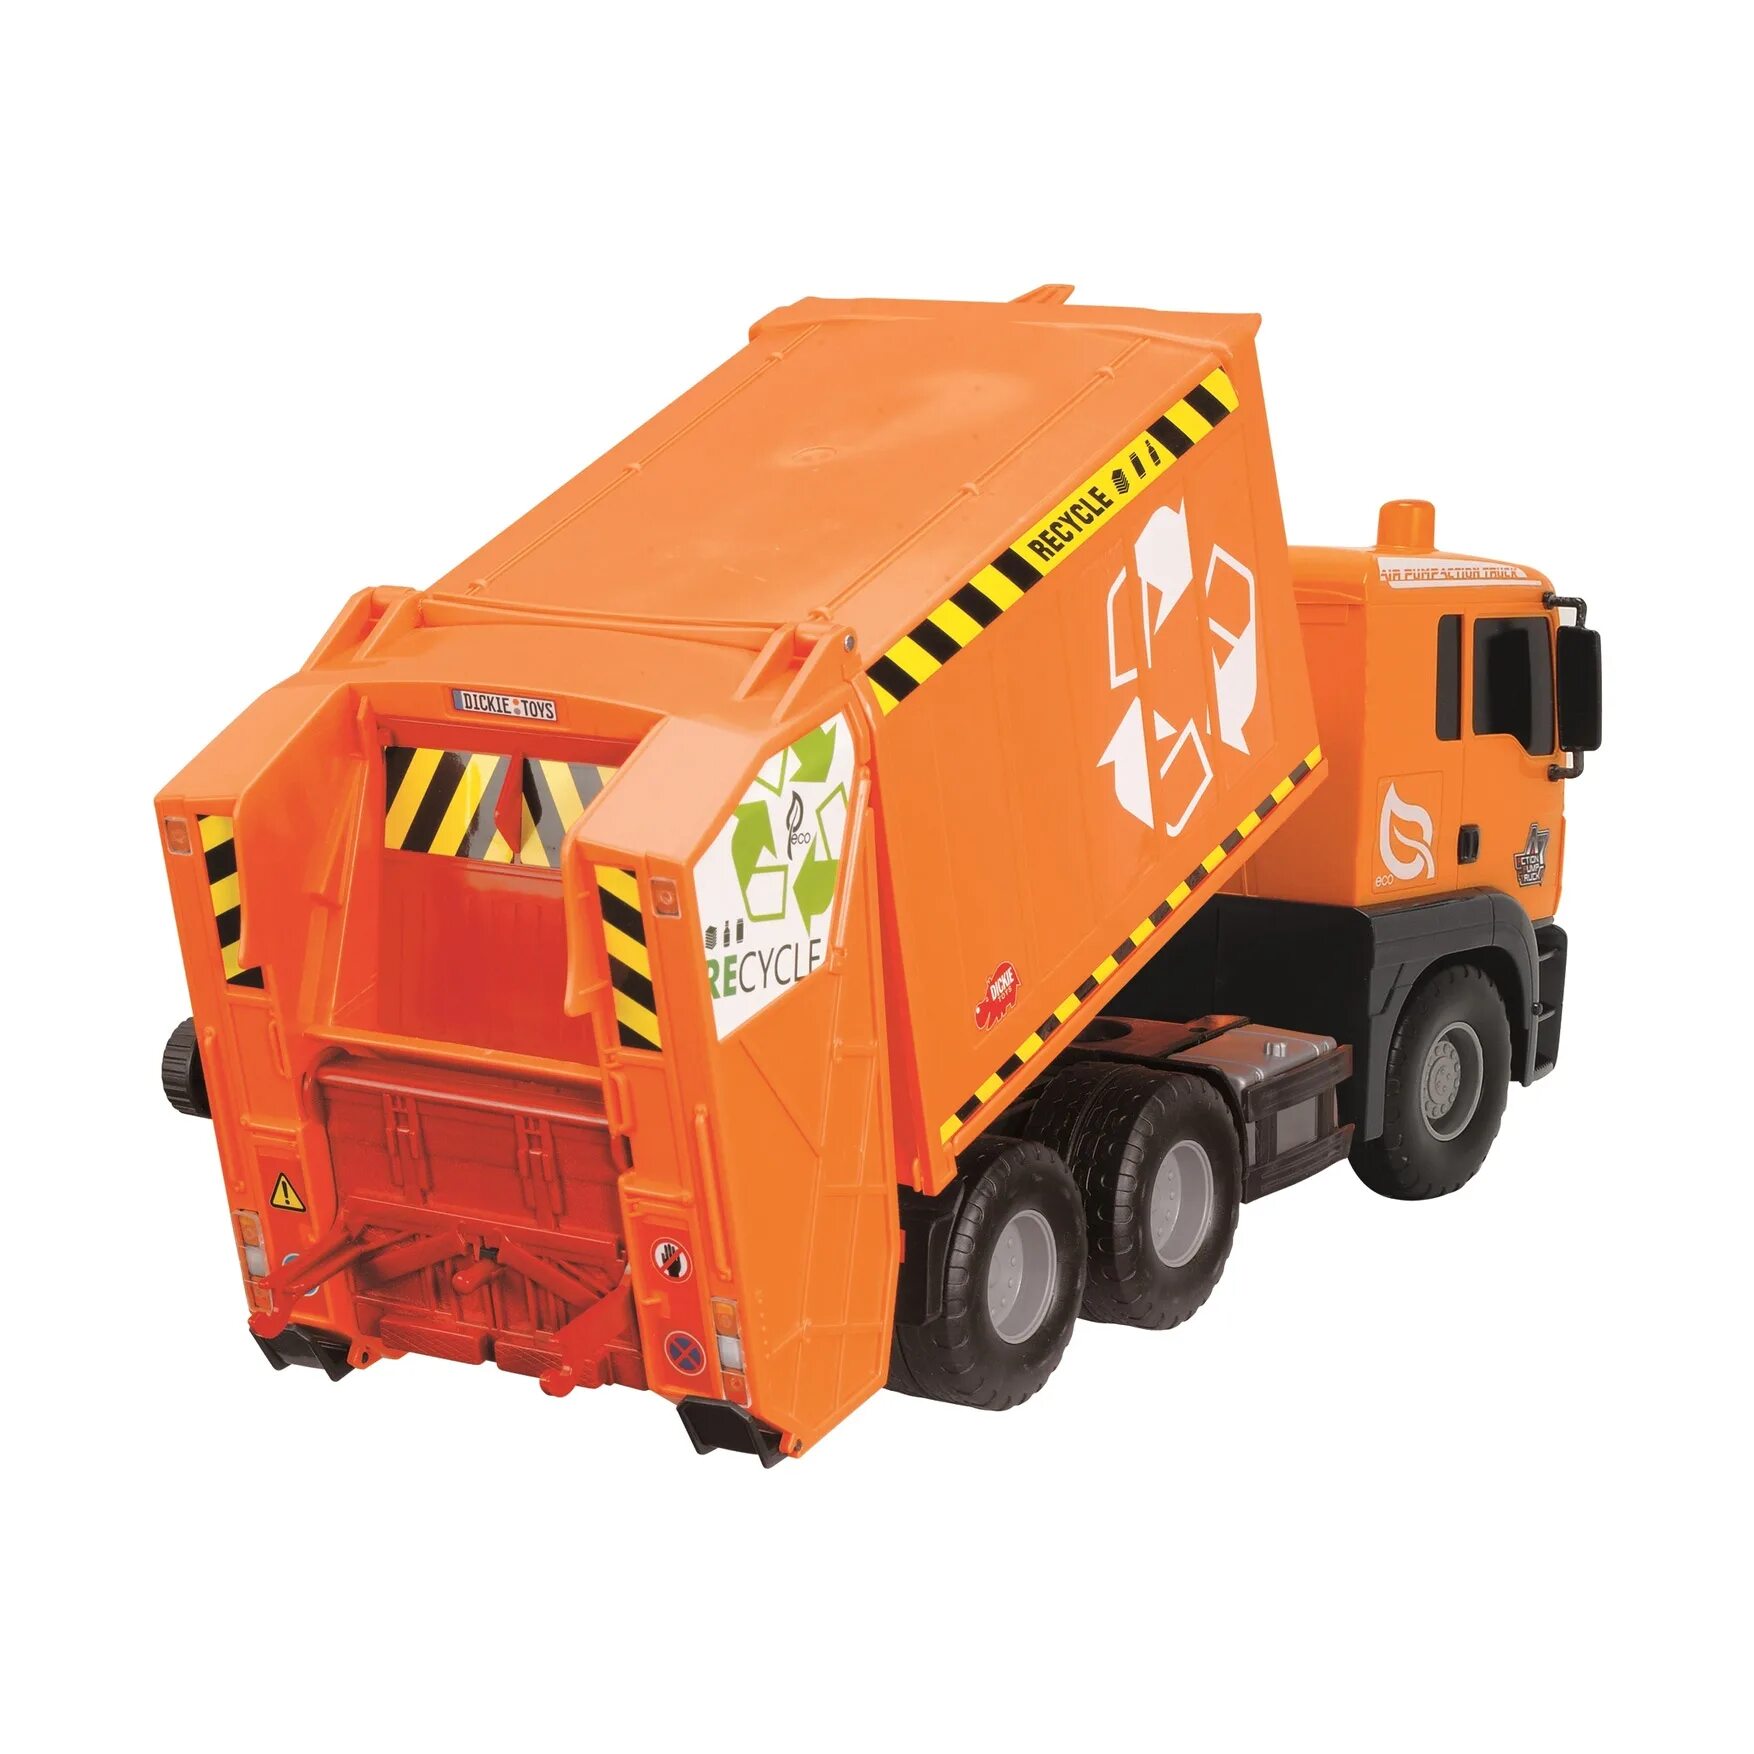 Мусоровоз Dickie Toys Air Pump (3809000) 55 см. Dickie Toys Garbage Truck мусоровоз. Мусоровоз Dickie Toys man (3749024) 55 см. Bruder 03560 мусоровоз Scania.